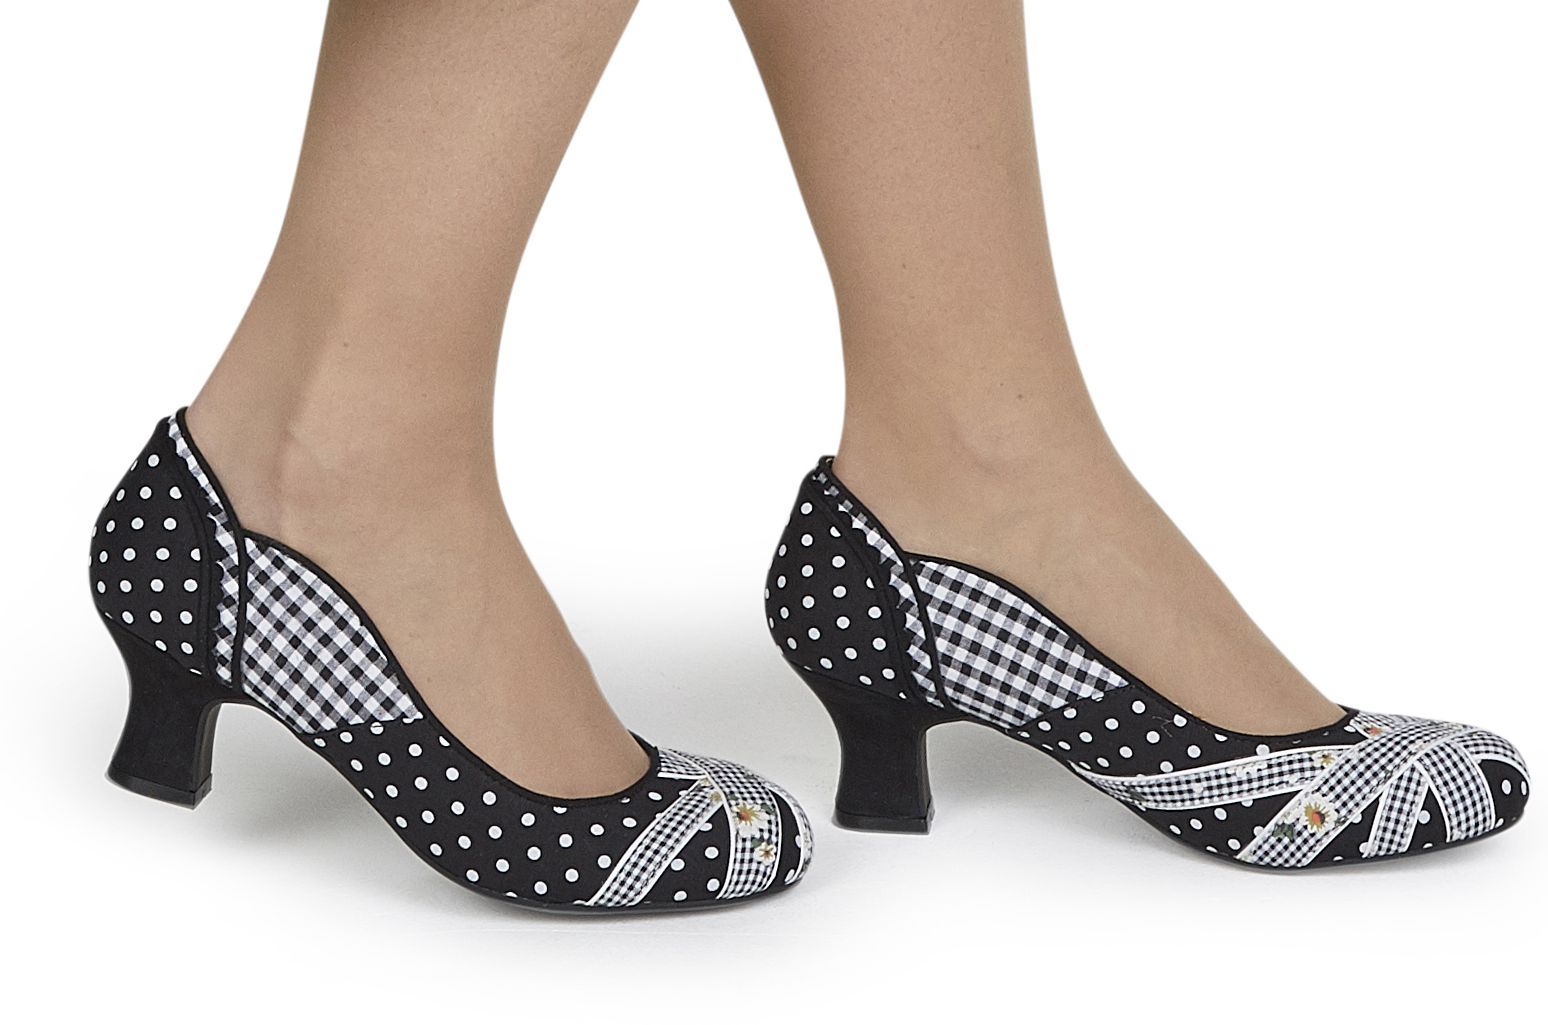 rs09278bbb_chaussures-escarpins-pin-up-retro-50-s-glam-chic-paula-noir